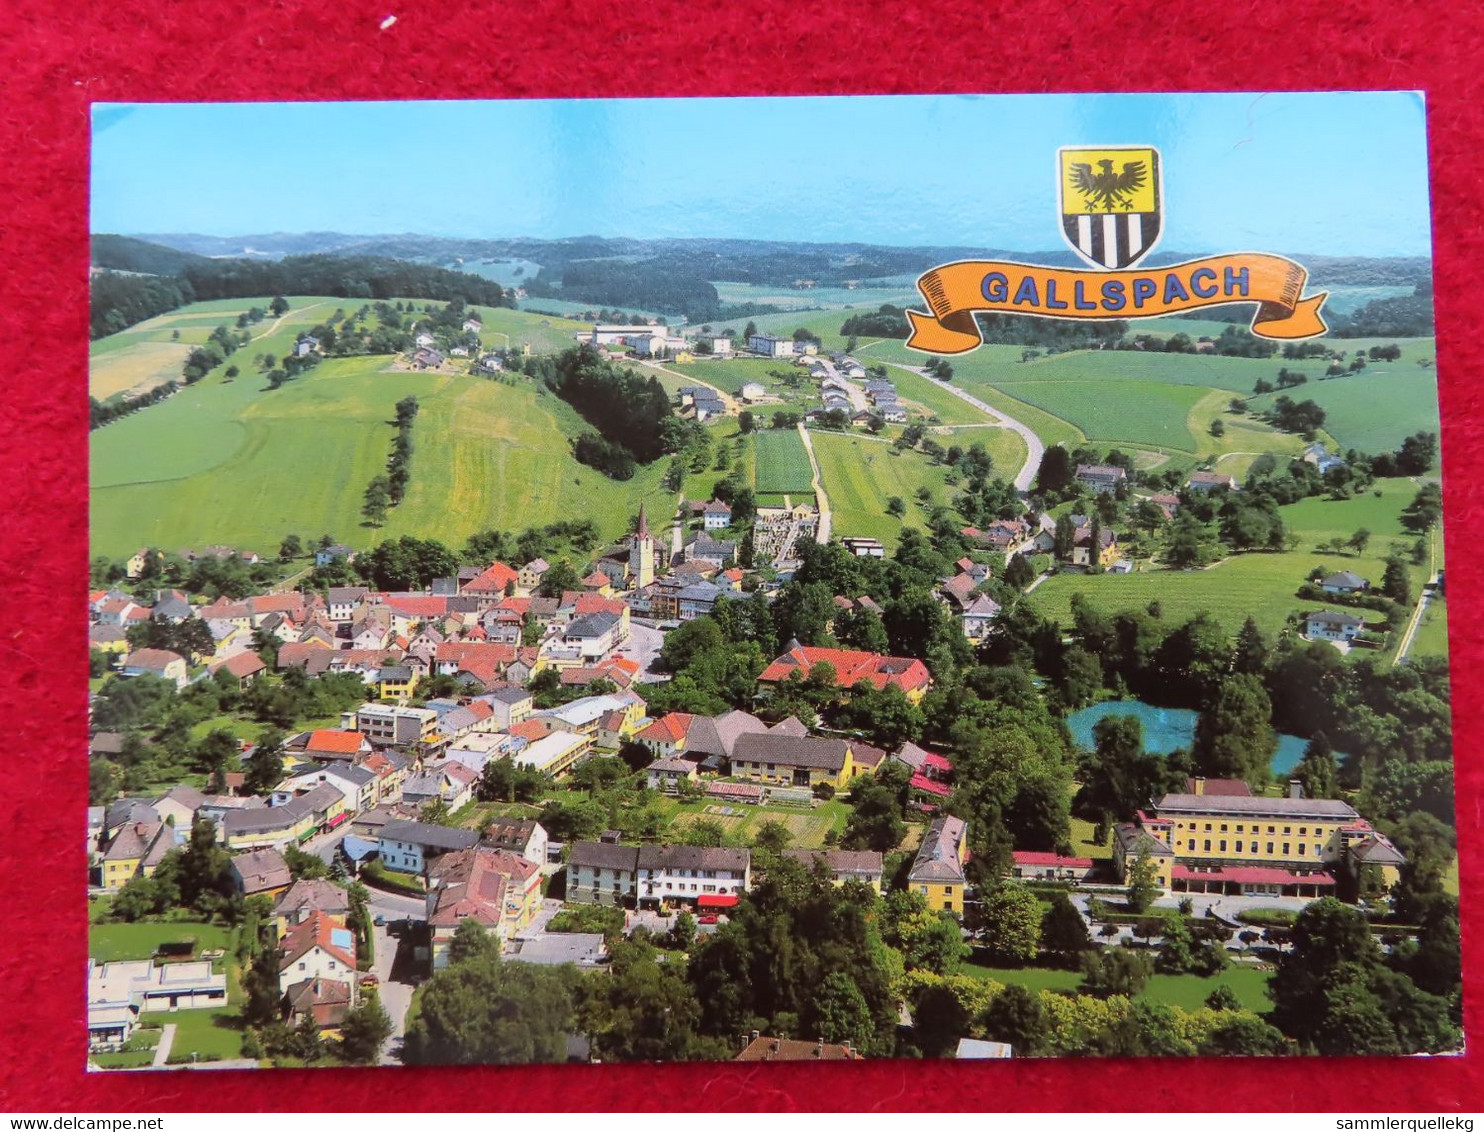 AK: Gallsbach, Gelaufen 21. 9, 1987 (Nr.3204) - Gallspach